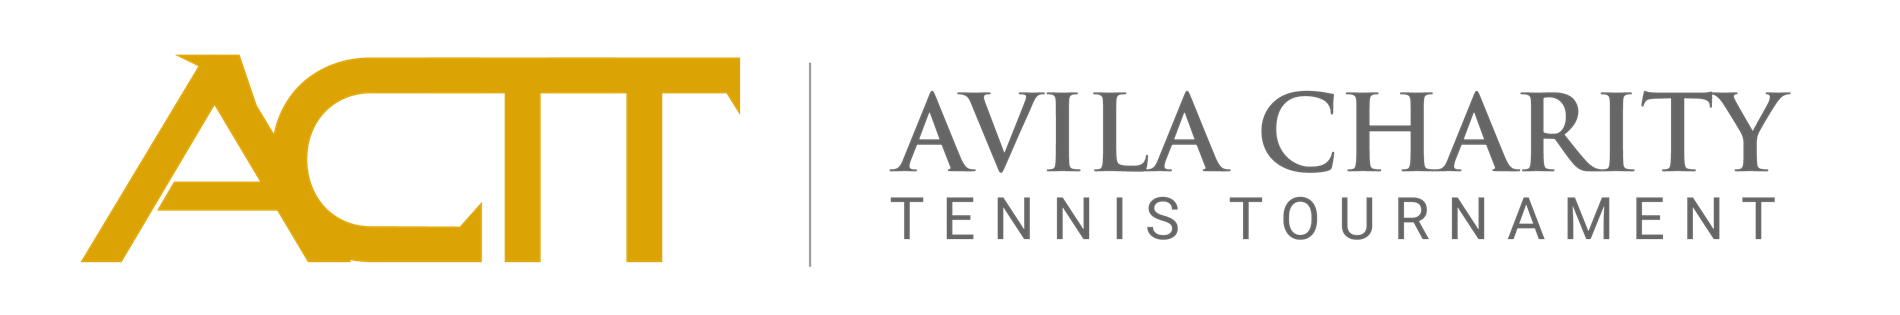 Avila Charity Tennis Tournament